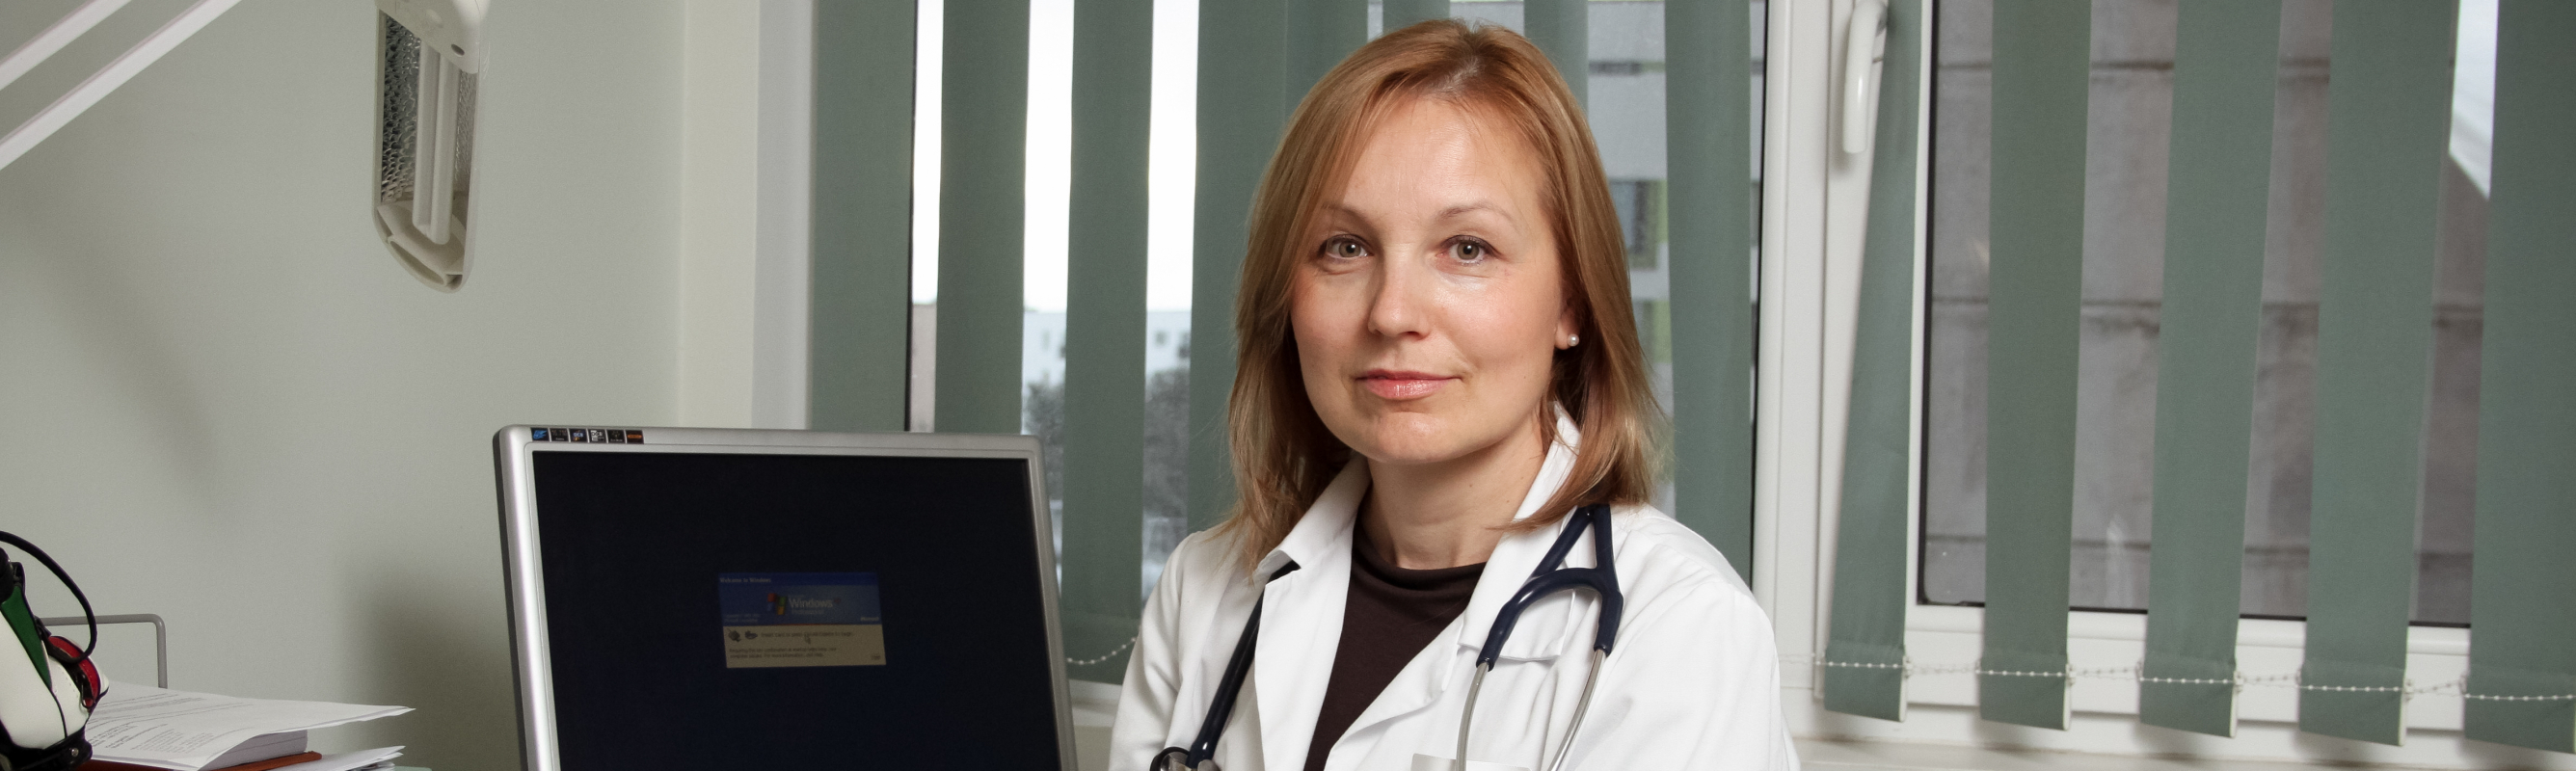 II kardioloogia arst dr Riina Vettus